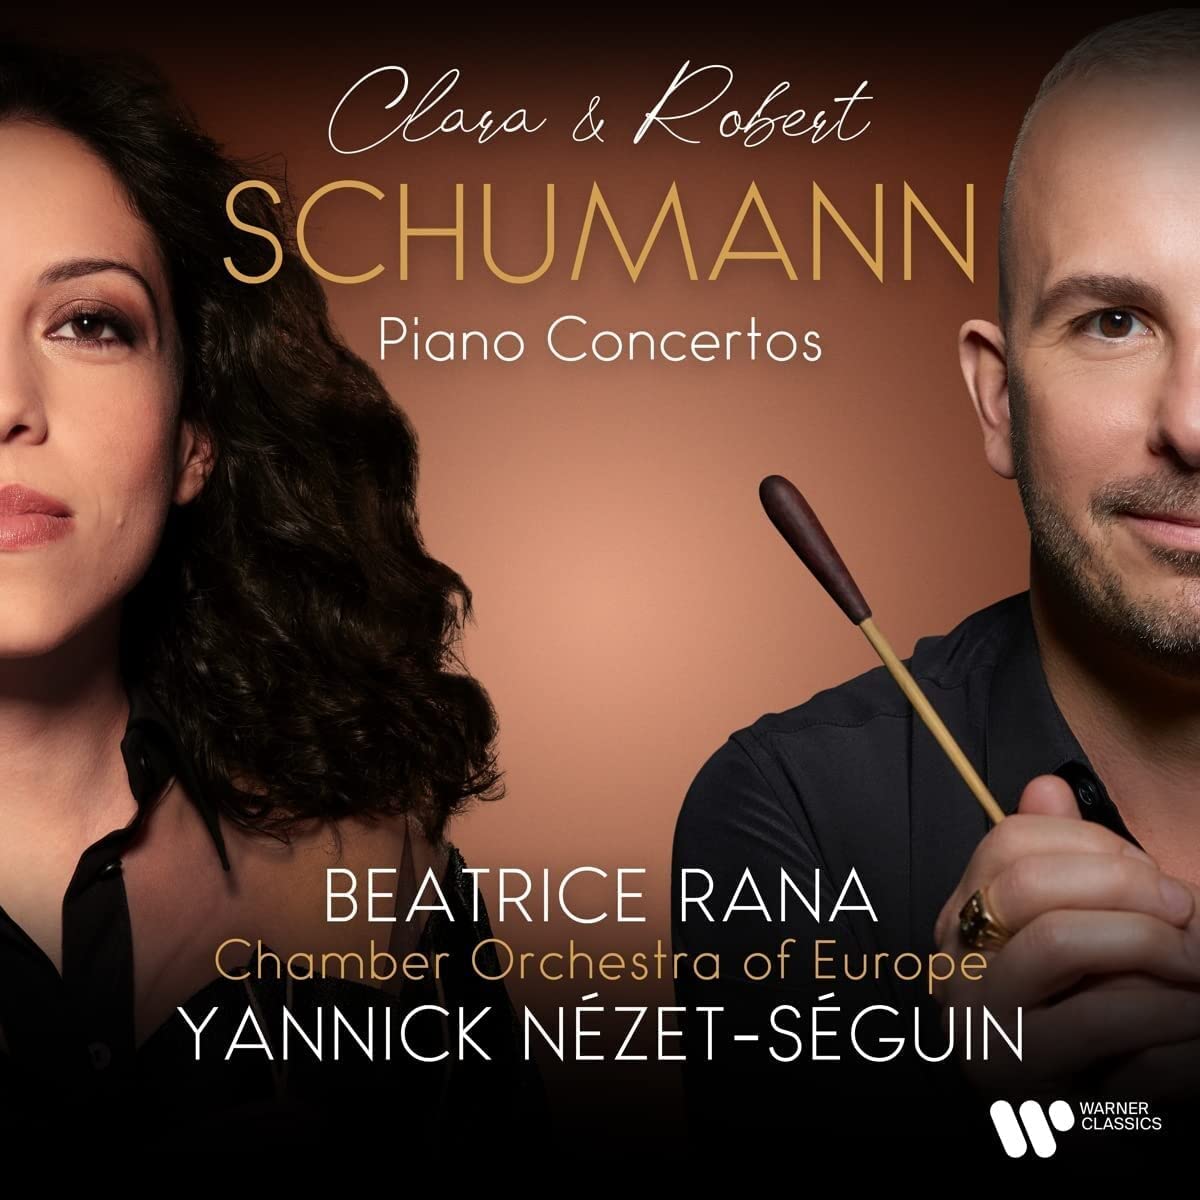 Clara & Robert Schumann: Piano Concertos | Beatrice Rana, Chamber Orchestra of Europe, Yannick Nezet-Seguin